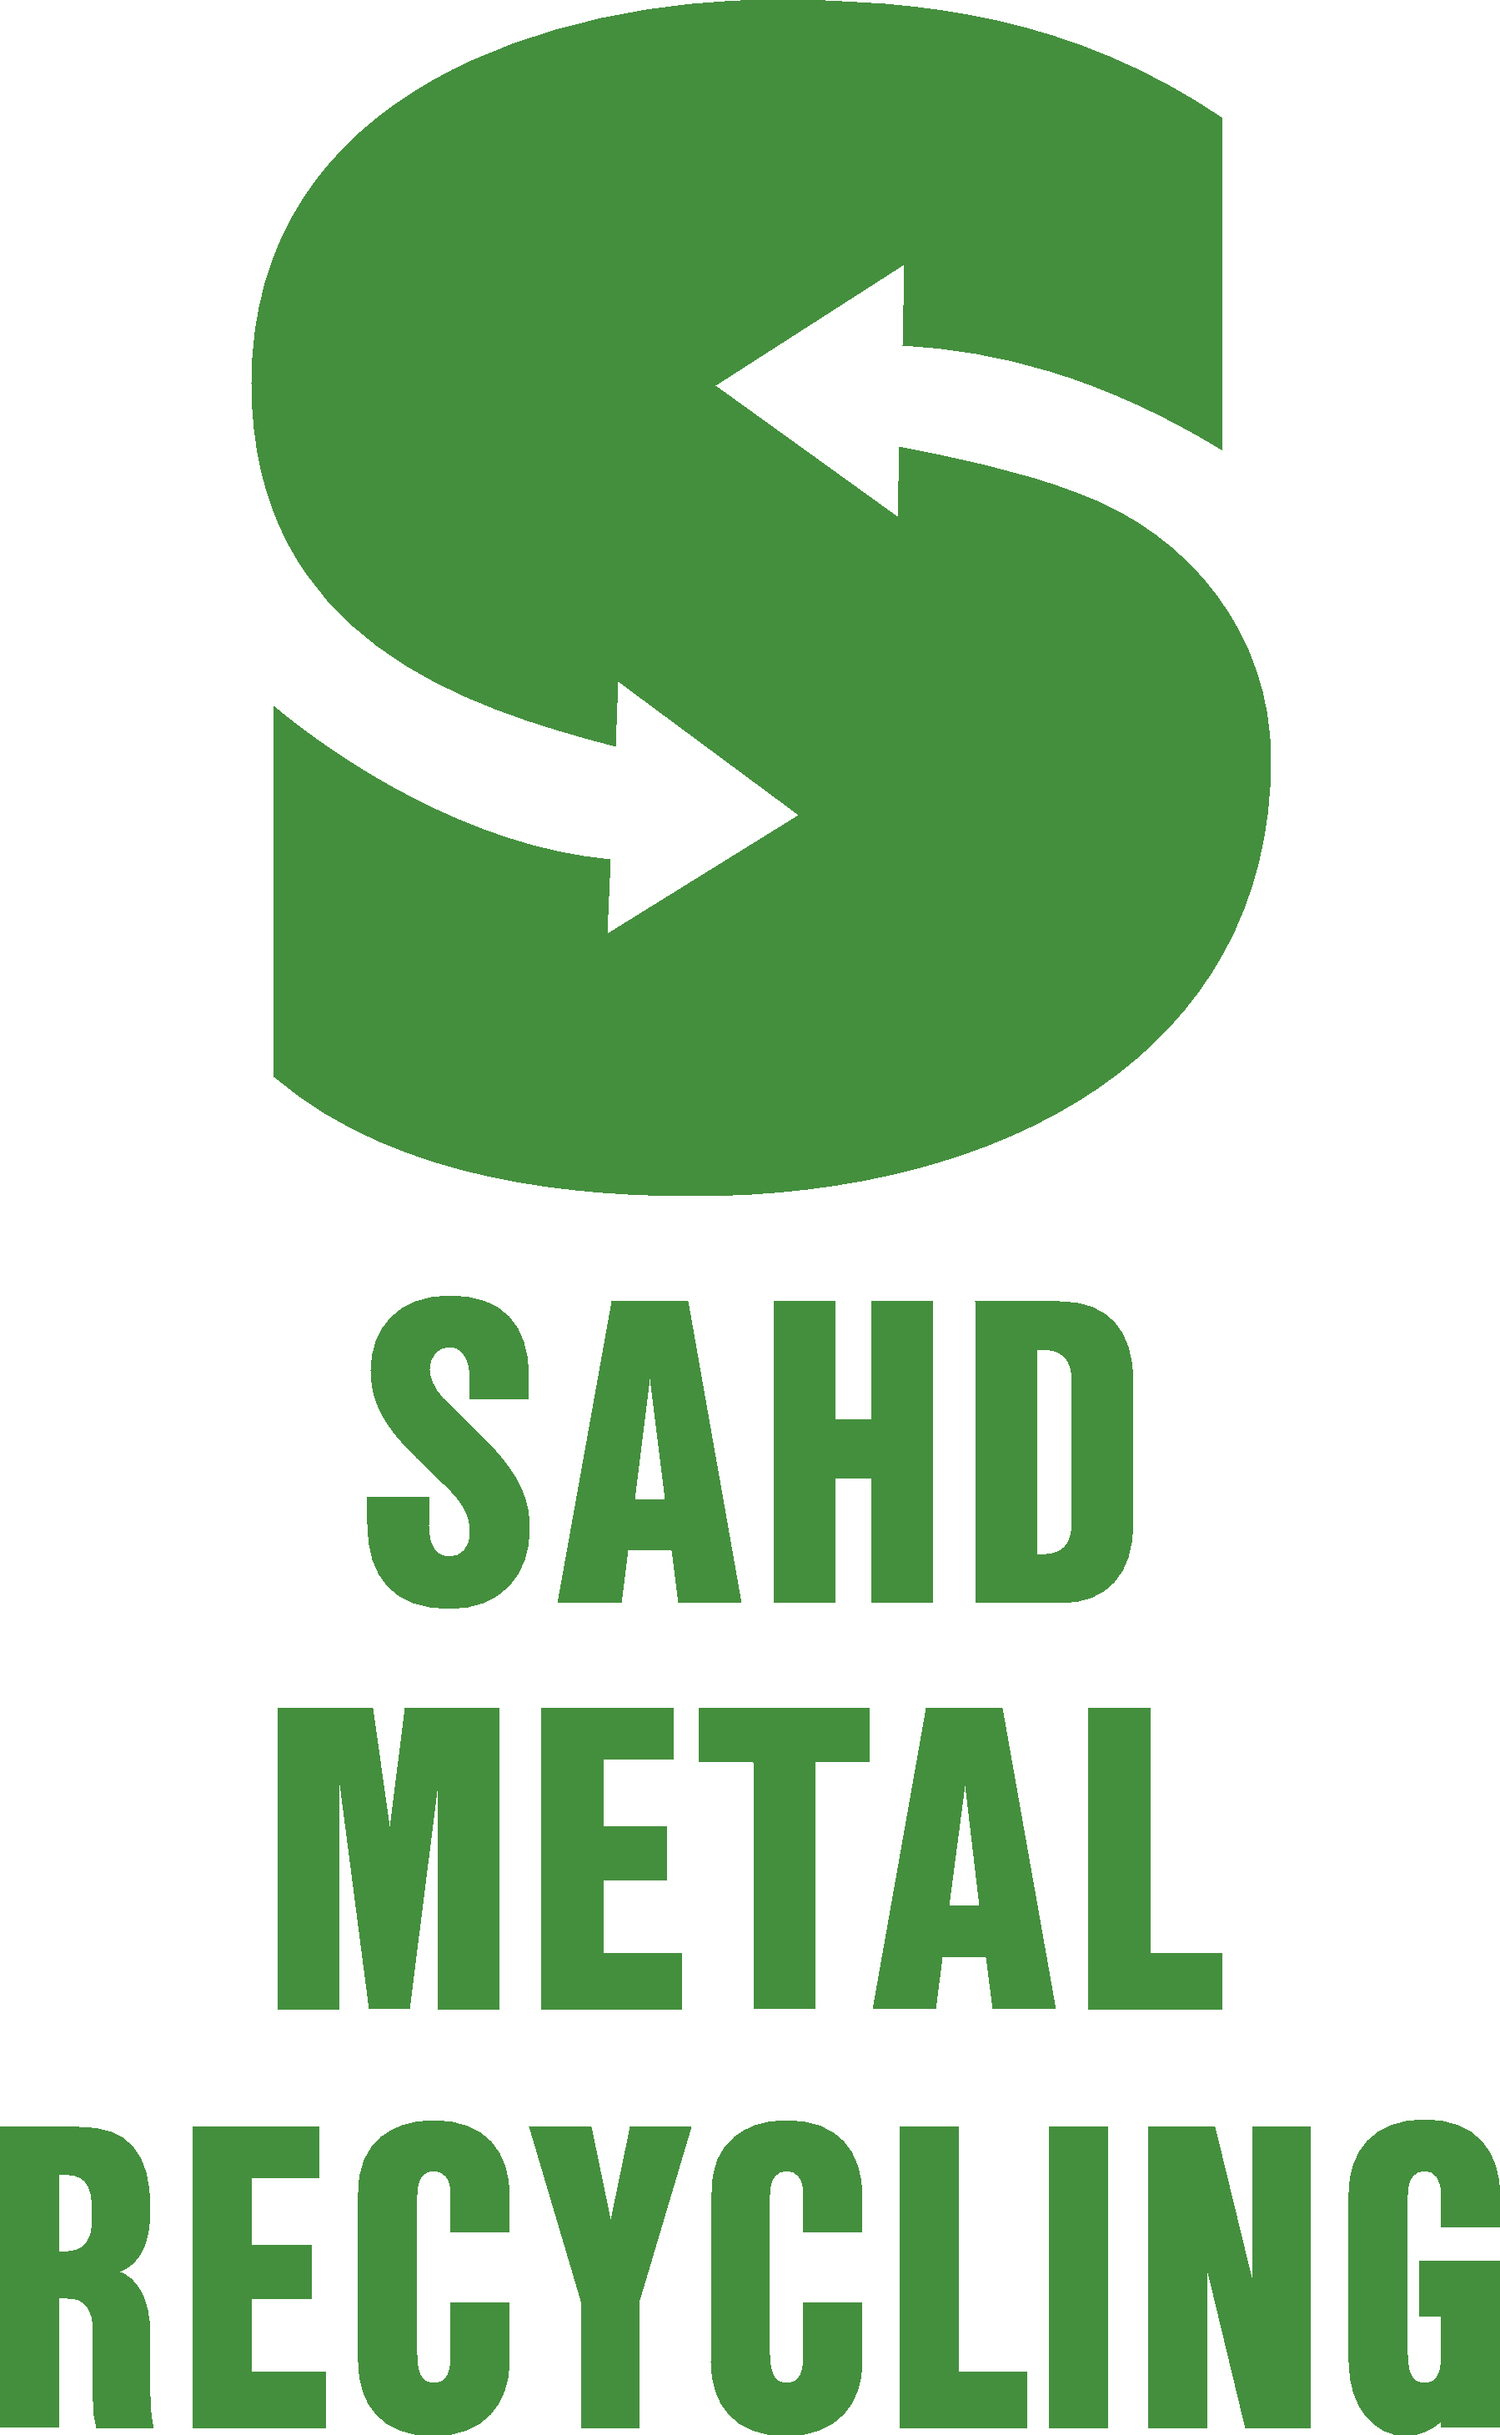  SAHD METAL RECYCLING